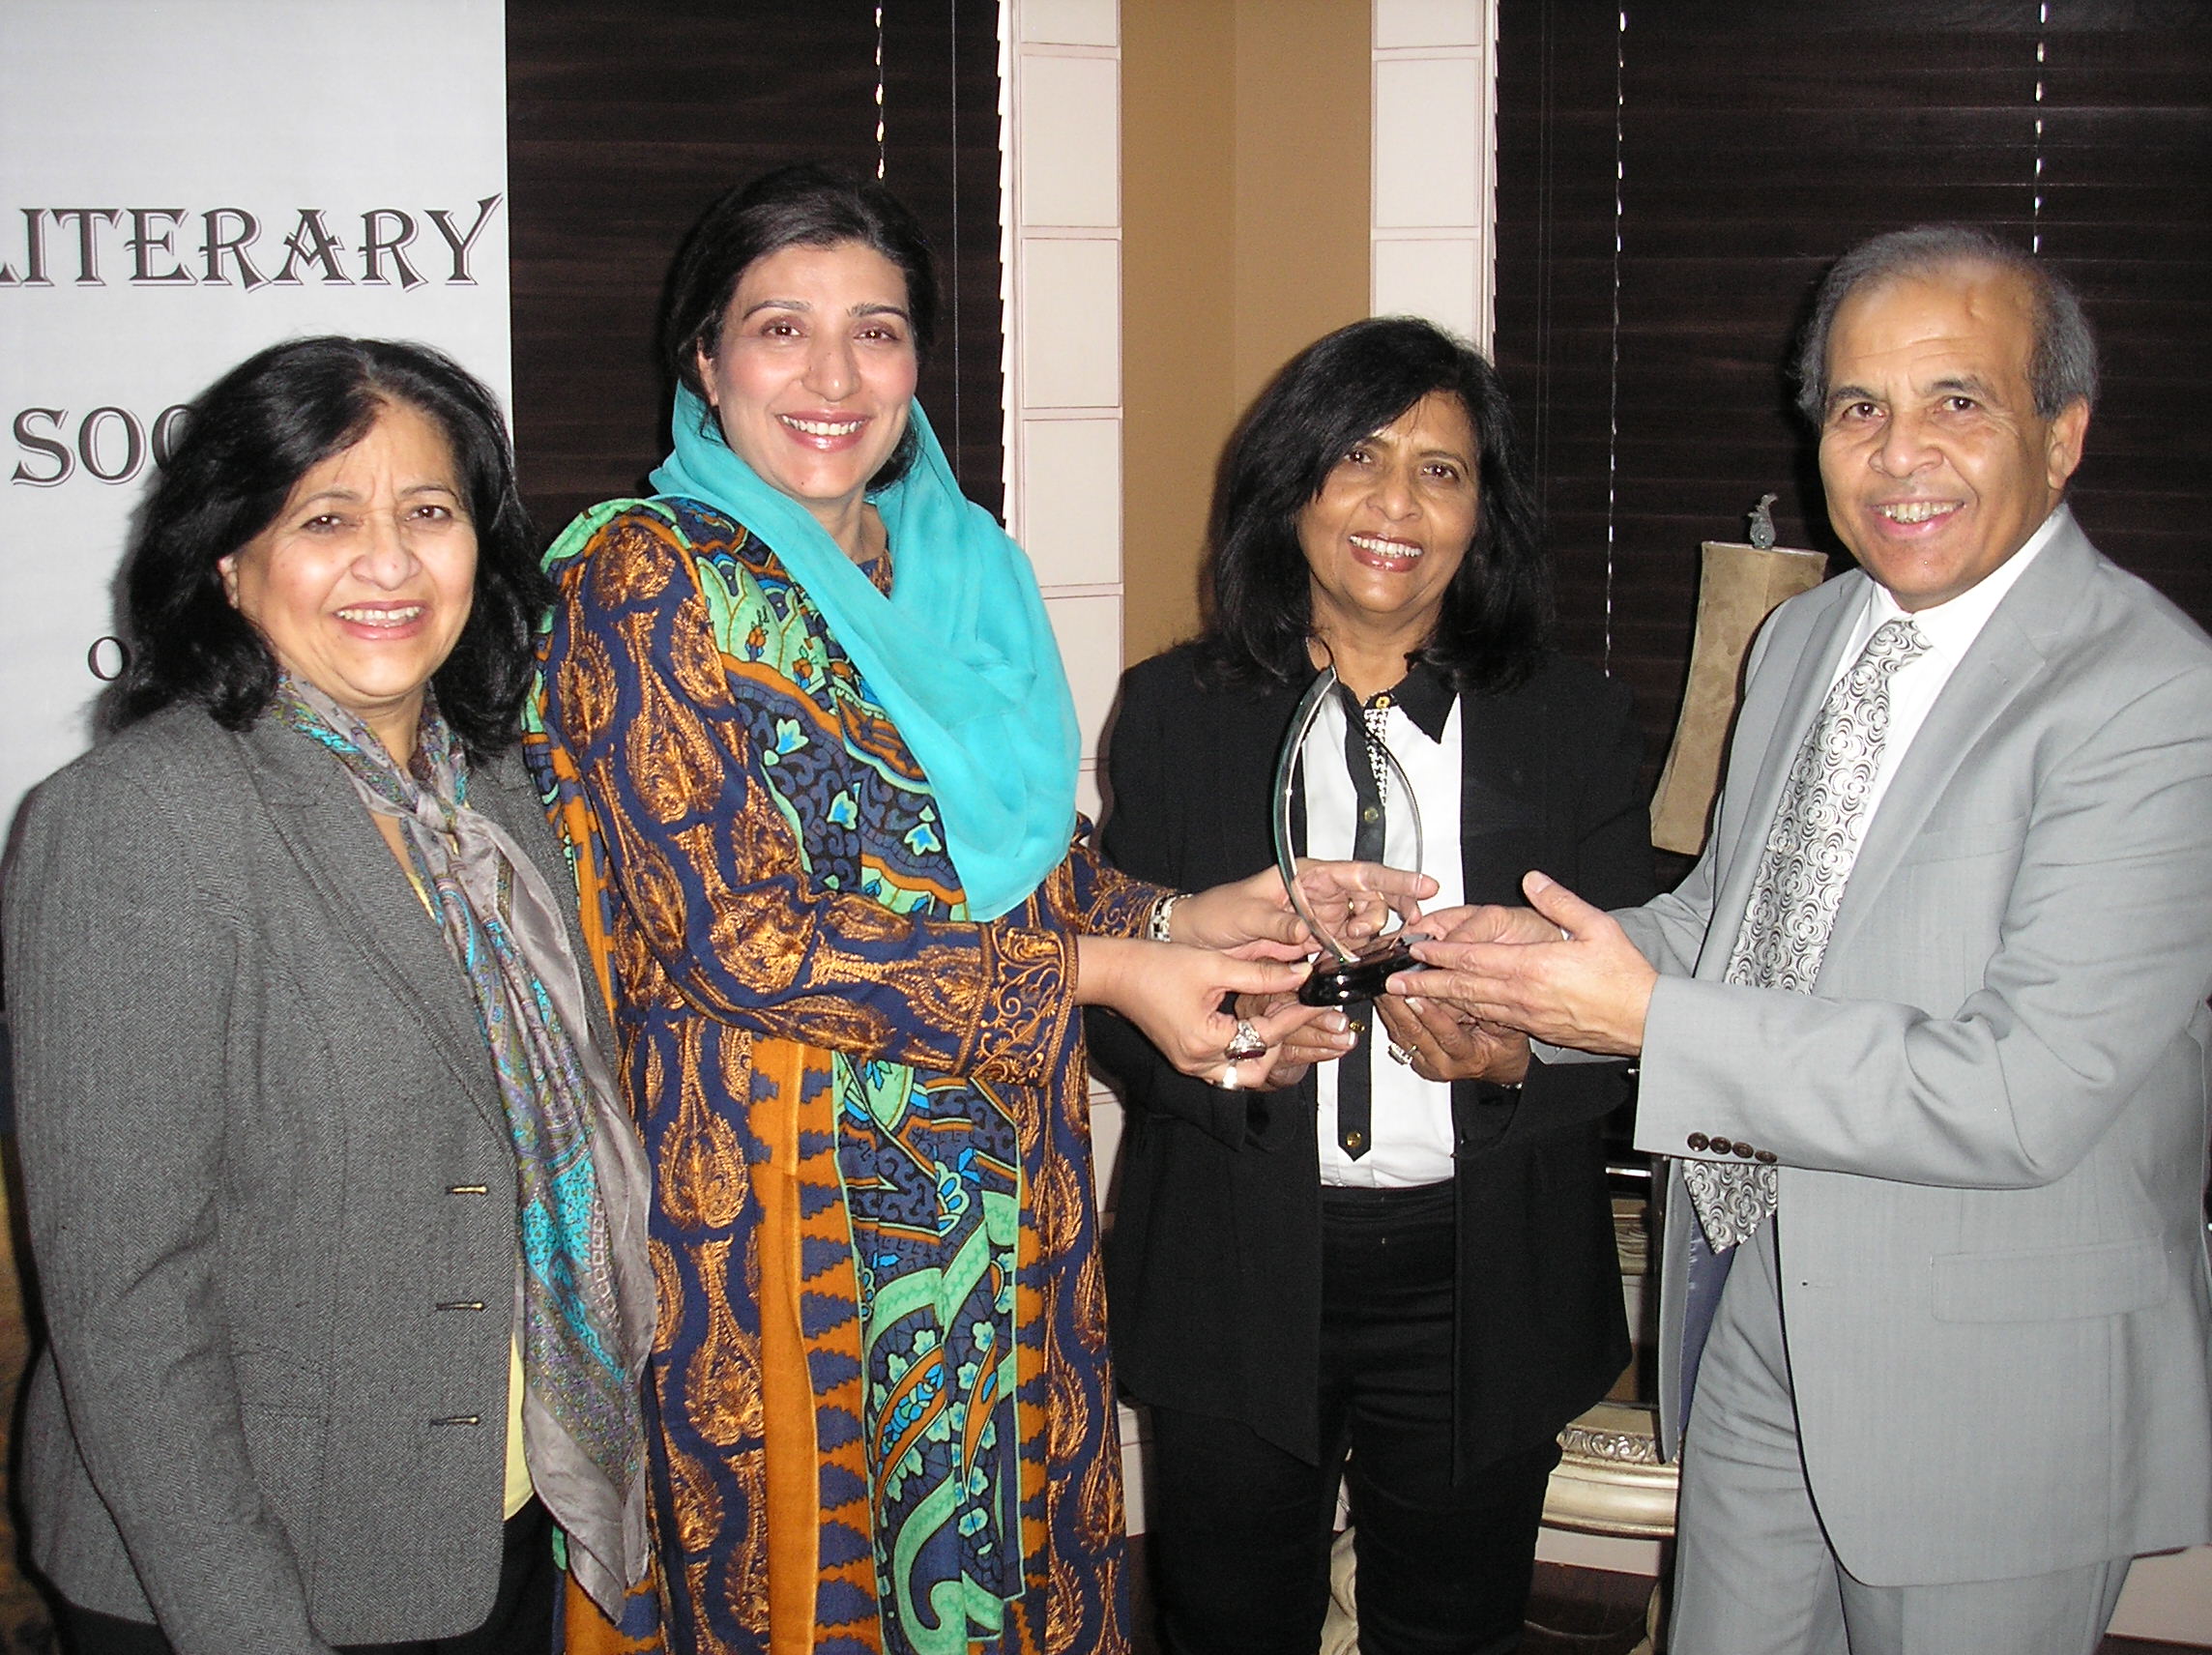 Iqbal Haider President JLSC and members are presenting award to Farzana Raja, in Canada